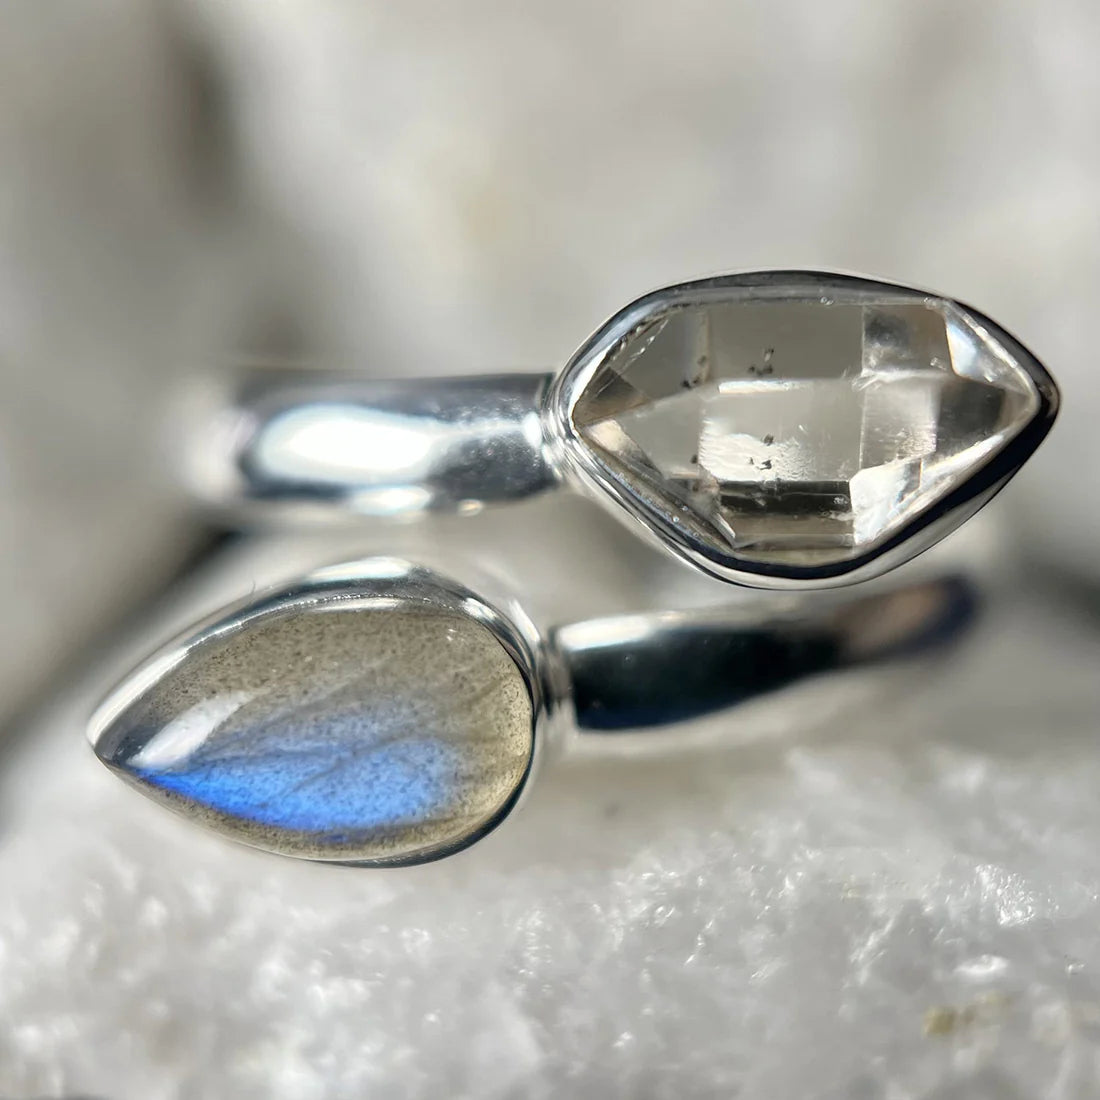 Labradorite With Herkimer Diamond Sterling Silver Ring